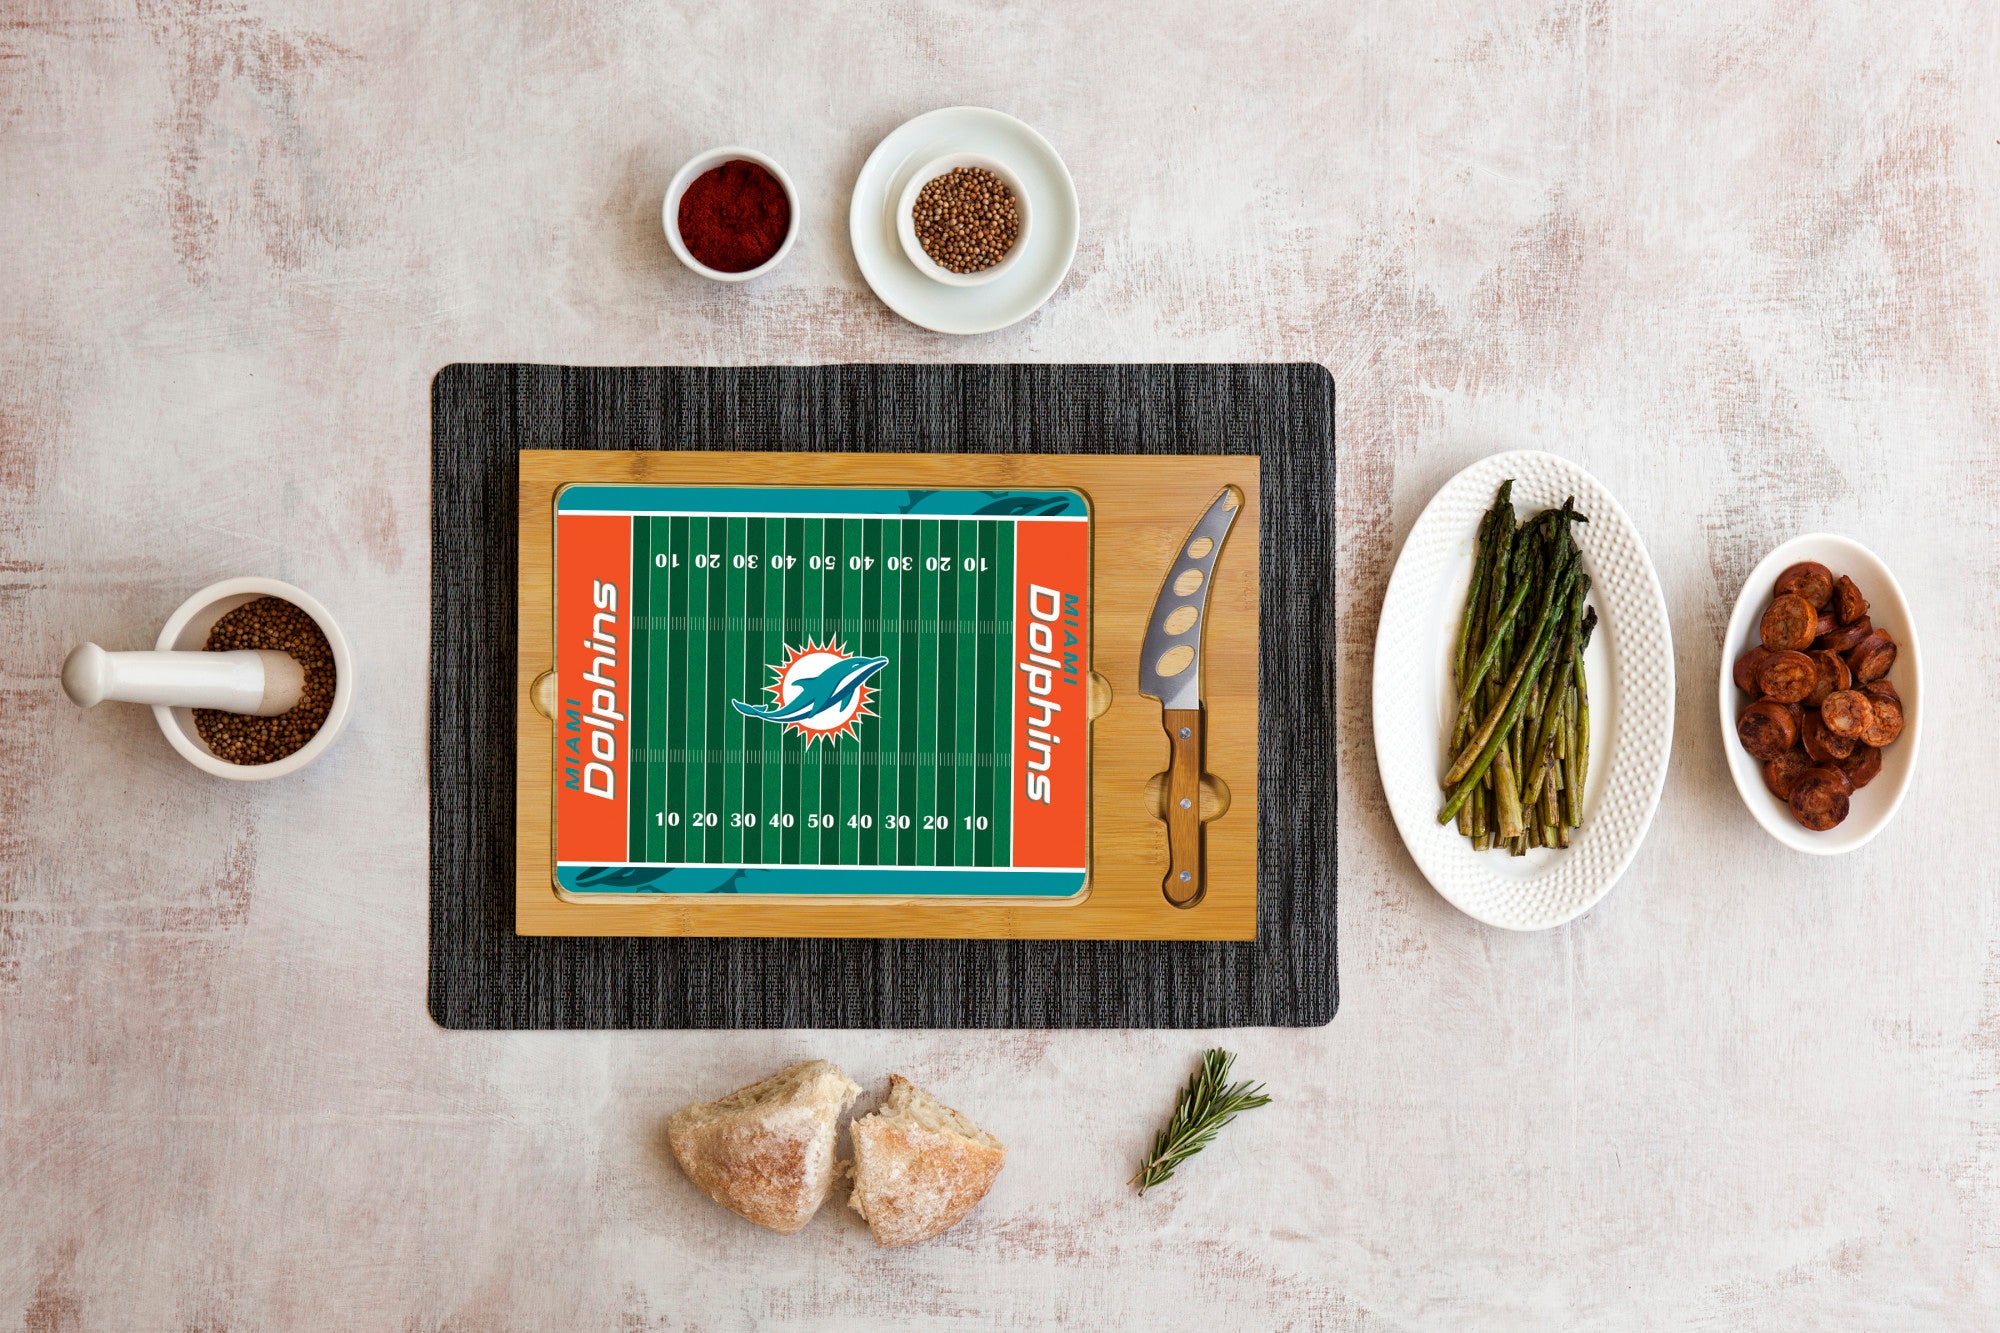 NFL 5-Piece Kitchen Knife Set - Miami Dolphins